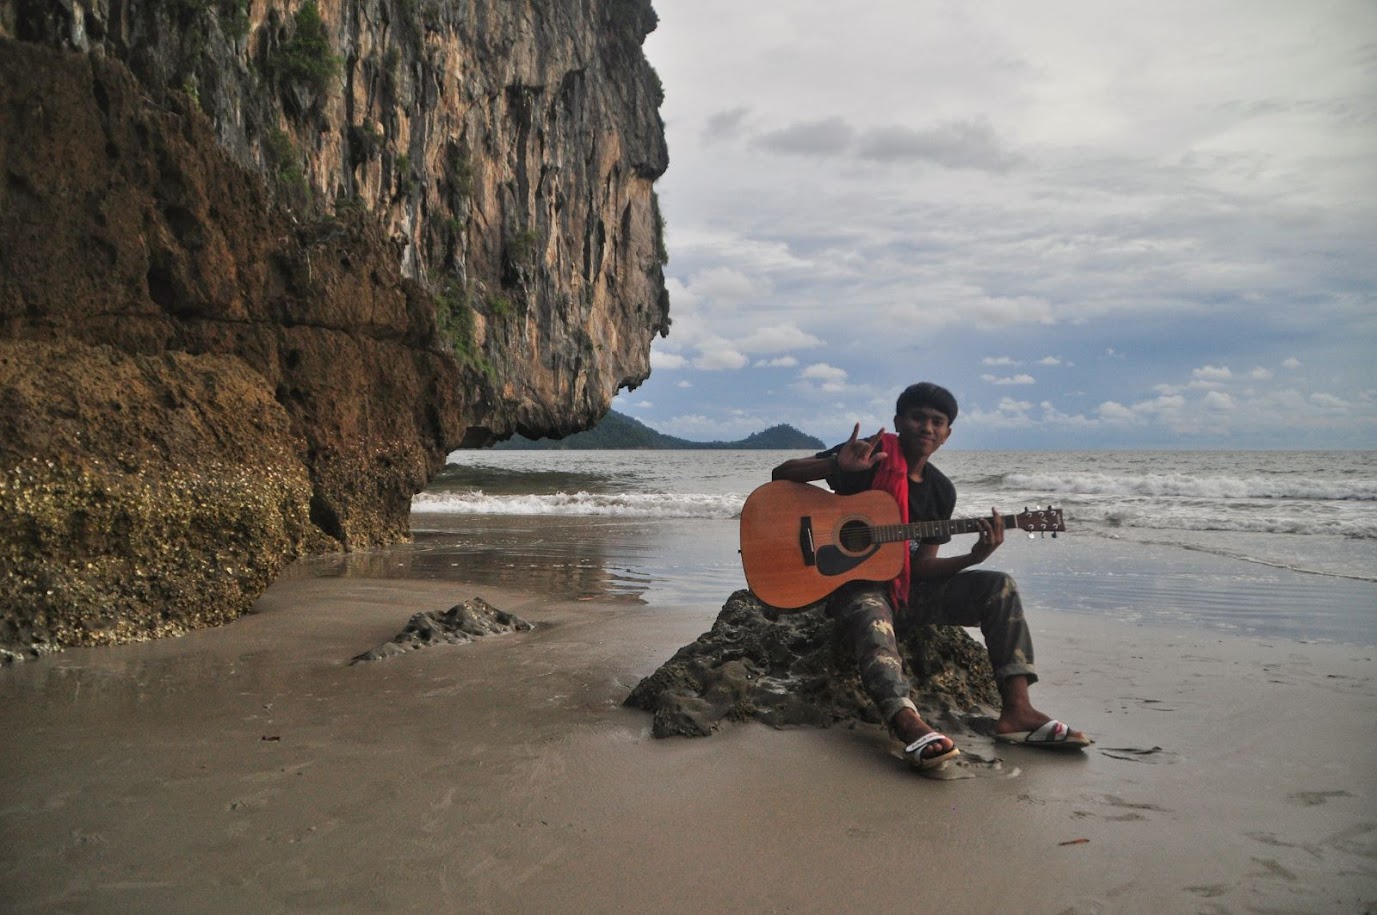 Hat Yao Beach
Thailand
Limestone rock
Thai boy playing guitar